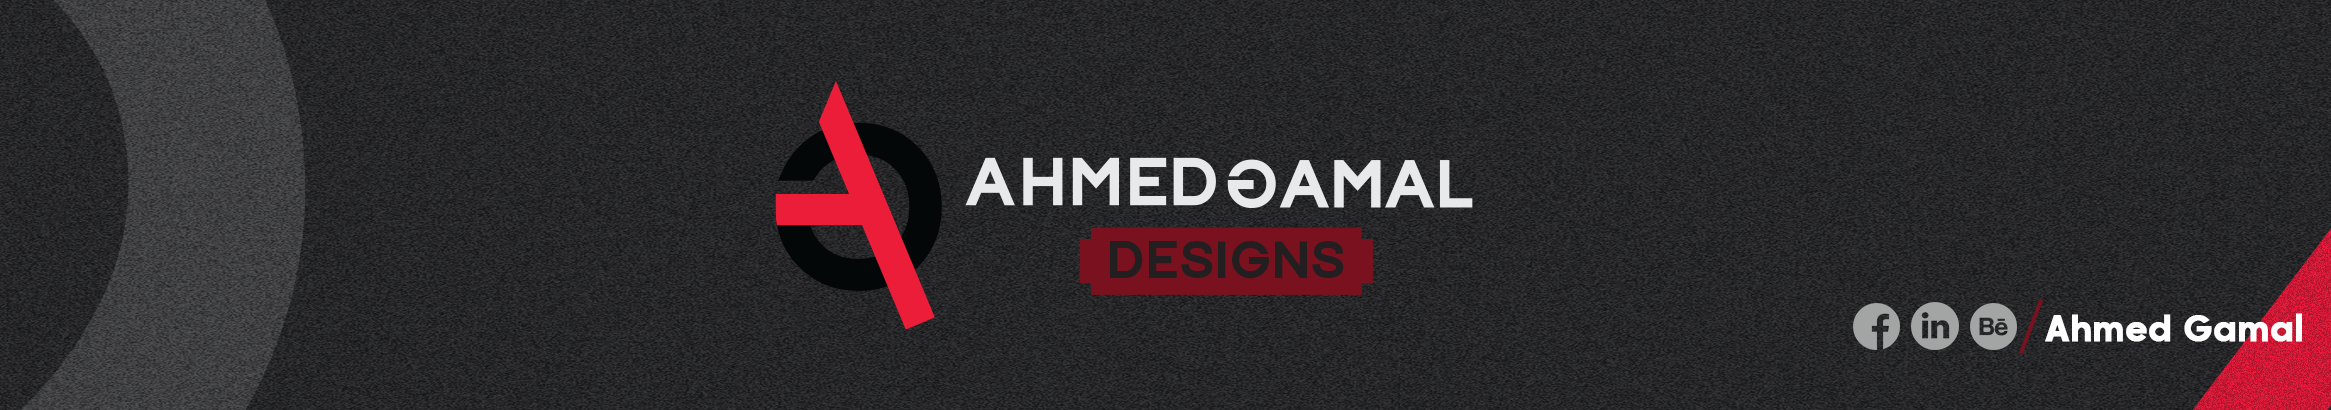 Banner de perfil de Ahmed Gamal